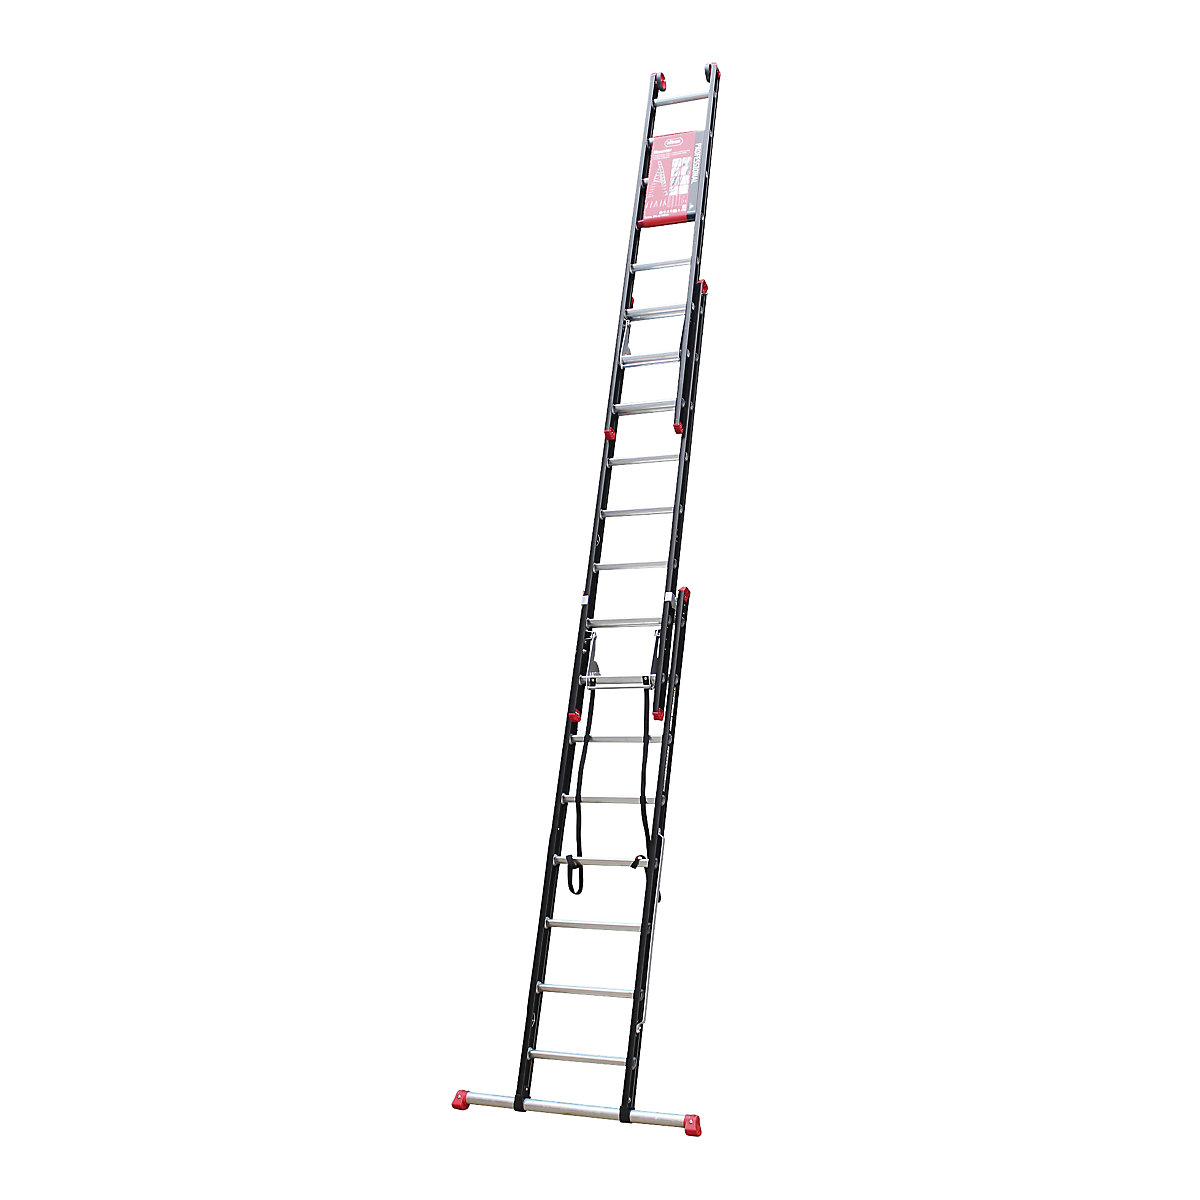 Escalera multiusos, revestida de aluminio – Altrex (Imagen del producto 29)-28